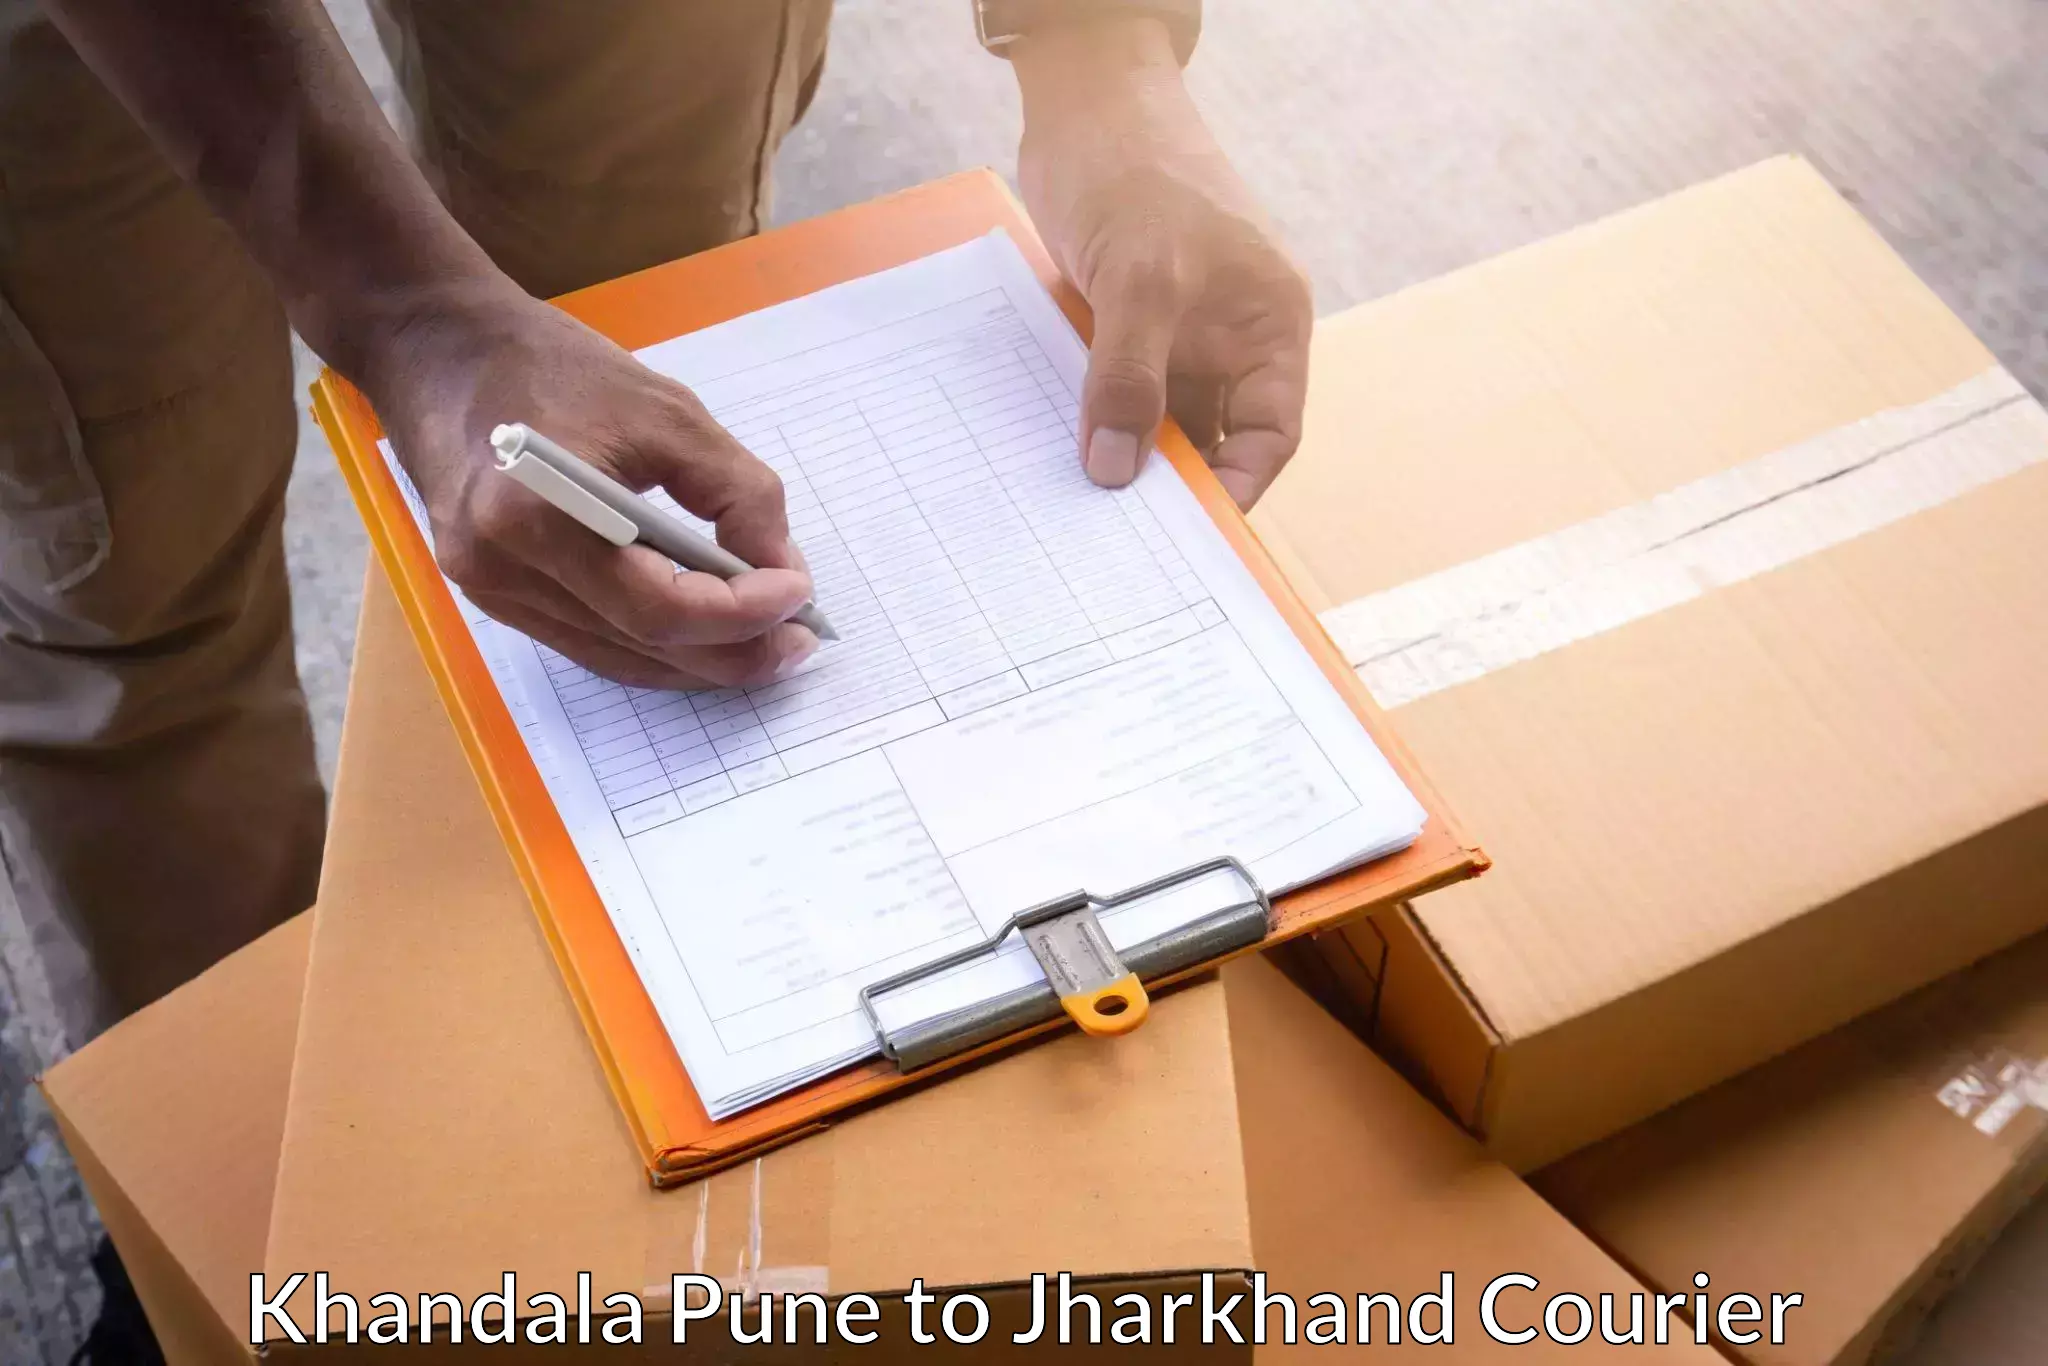 Global shipping networks Khandala Pune to Dhanbad